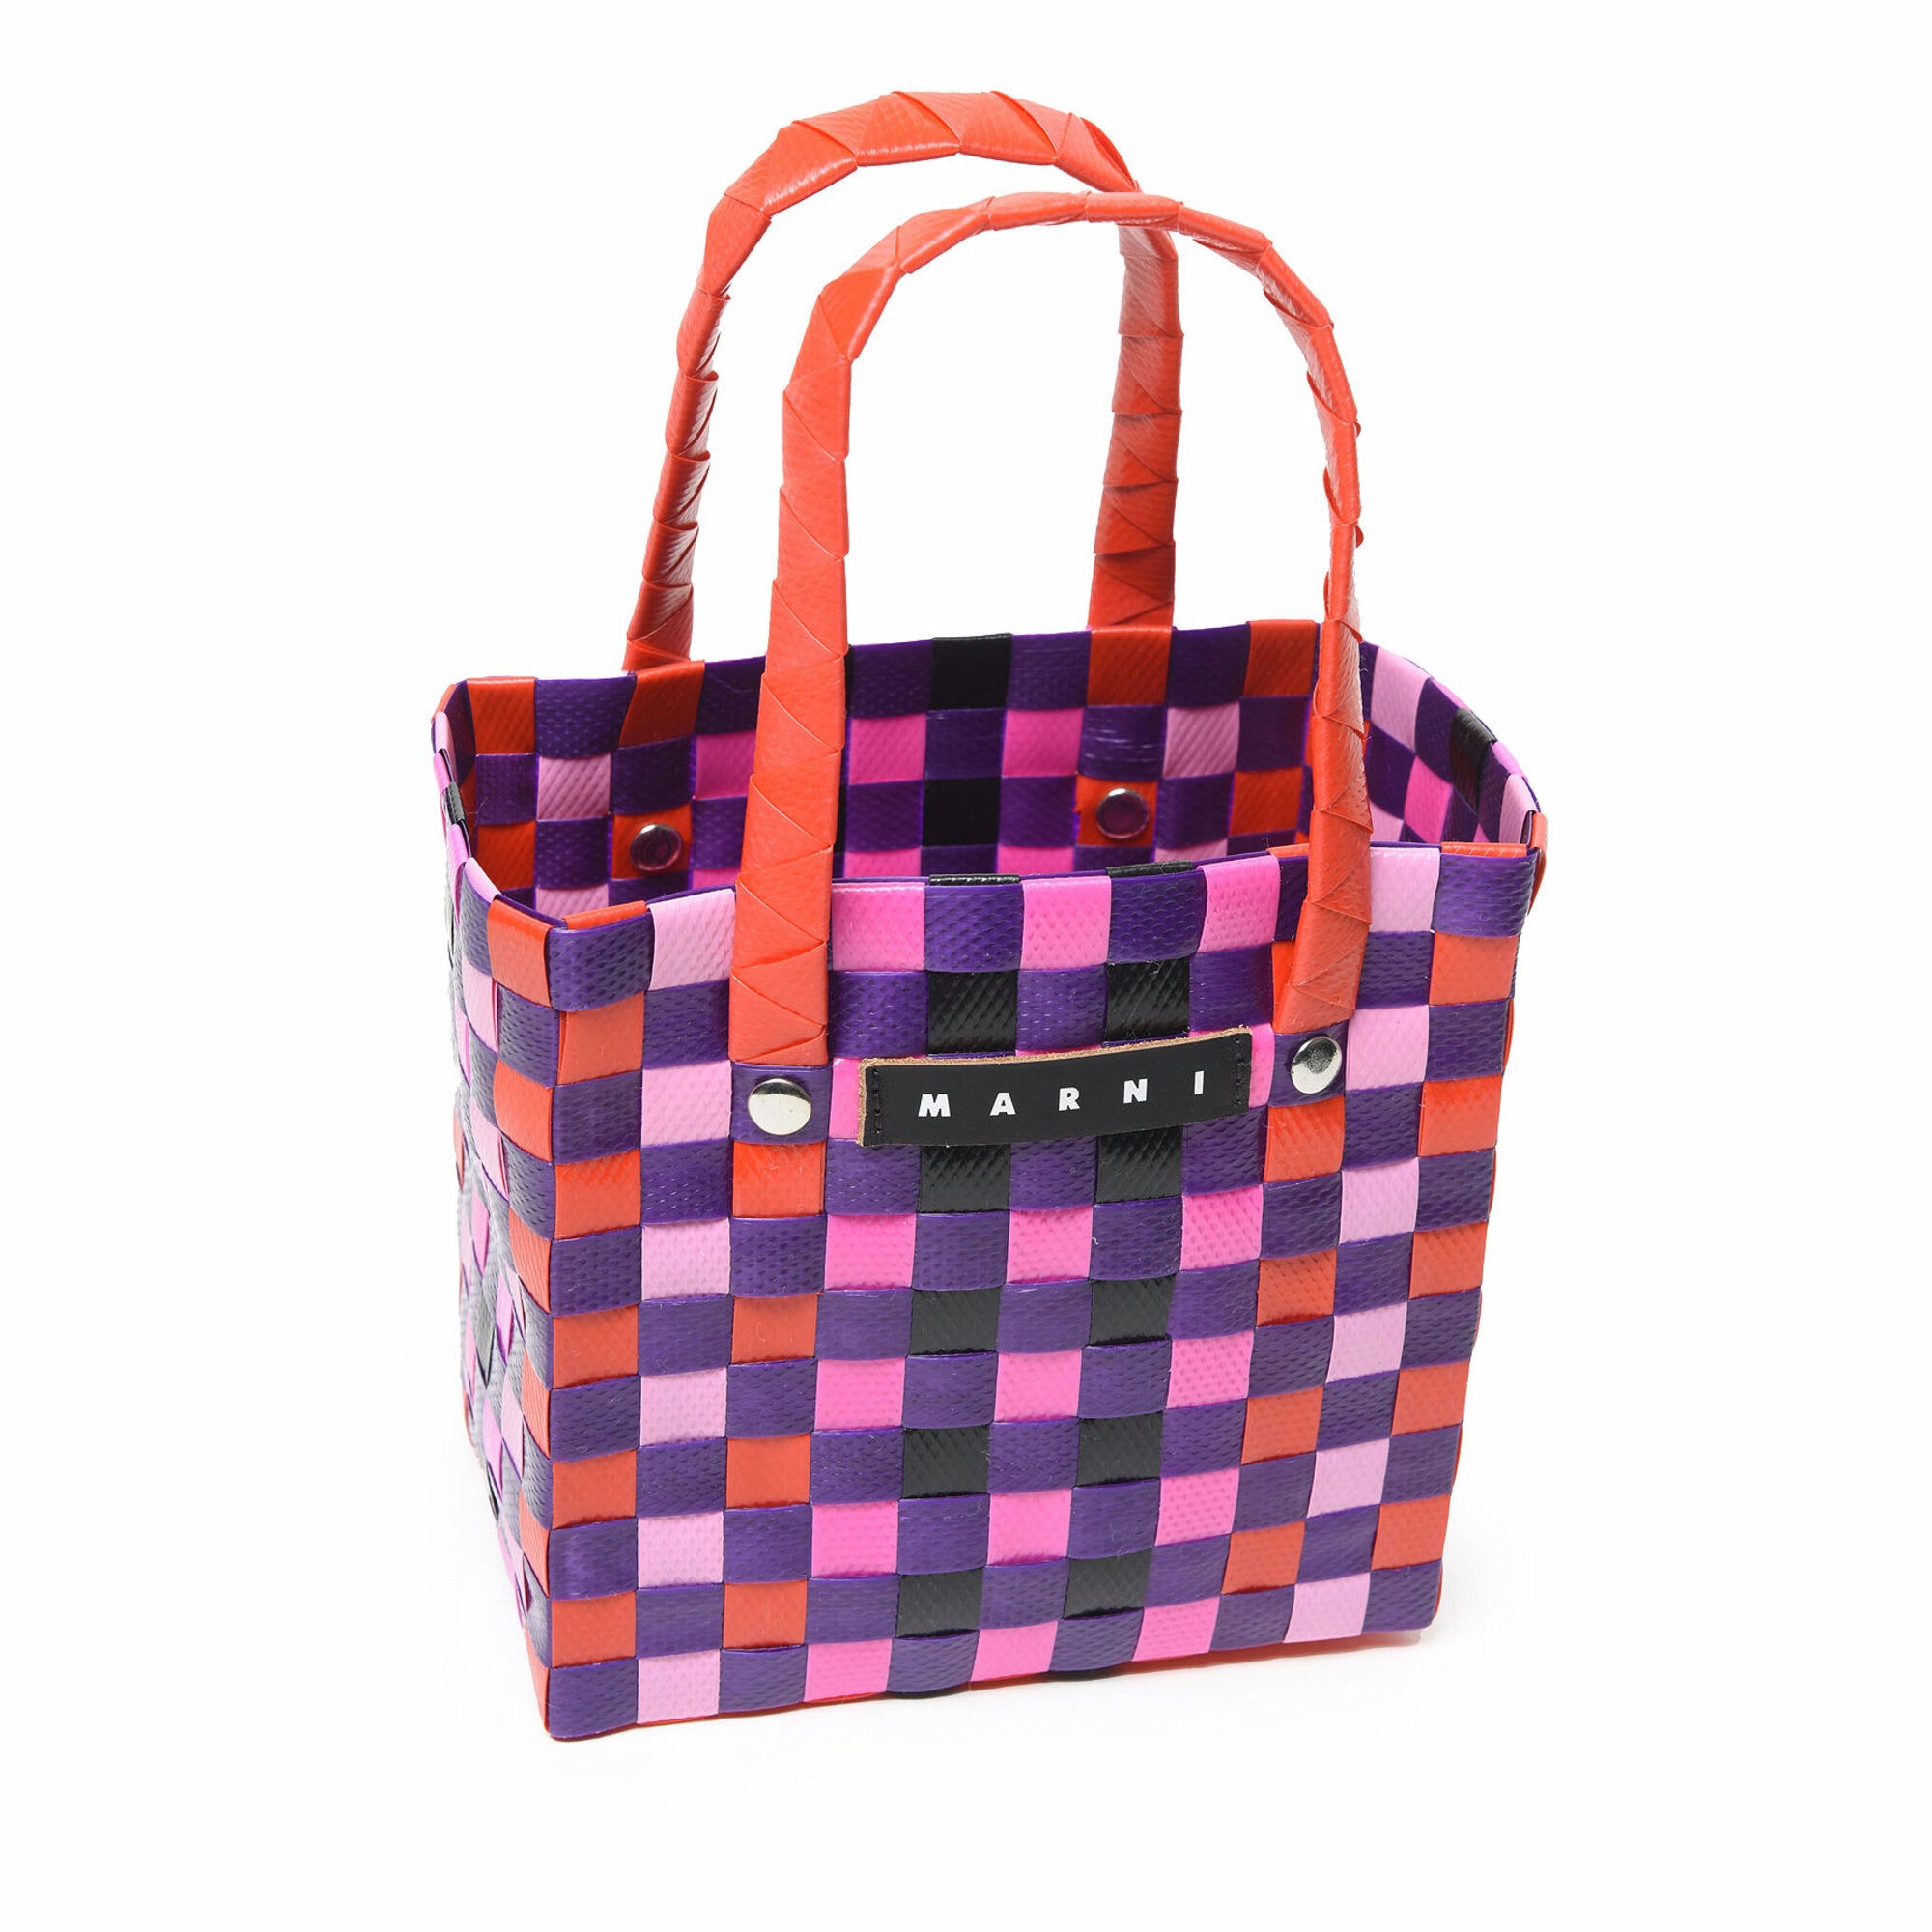 Girls Purple Logo Handbag